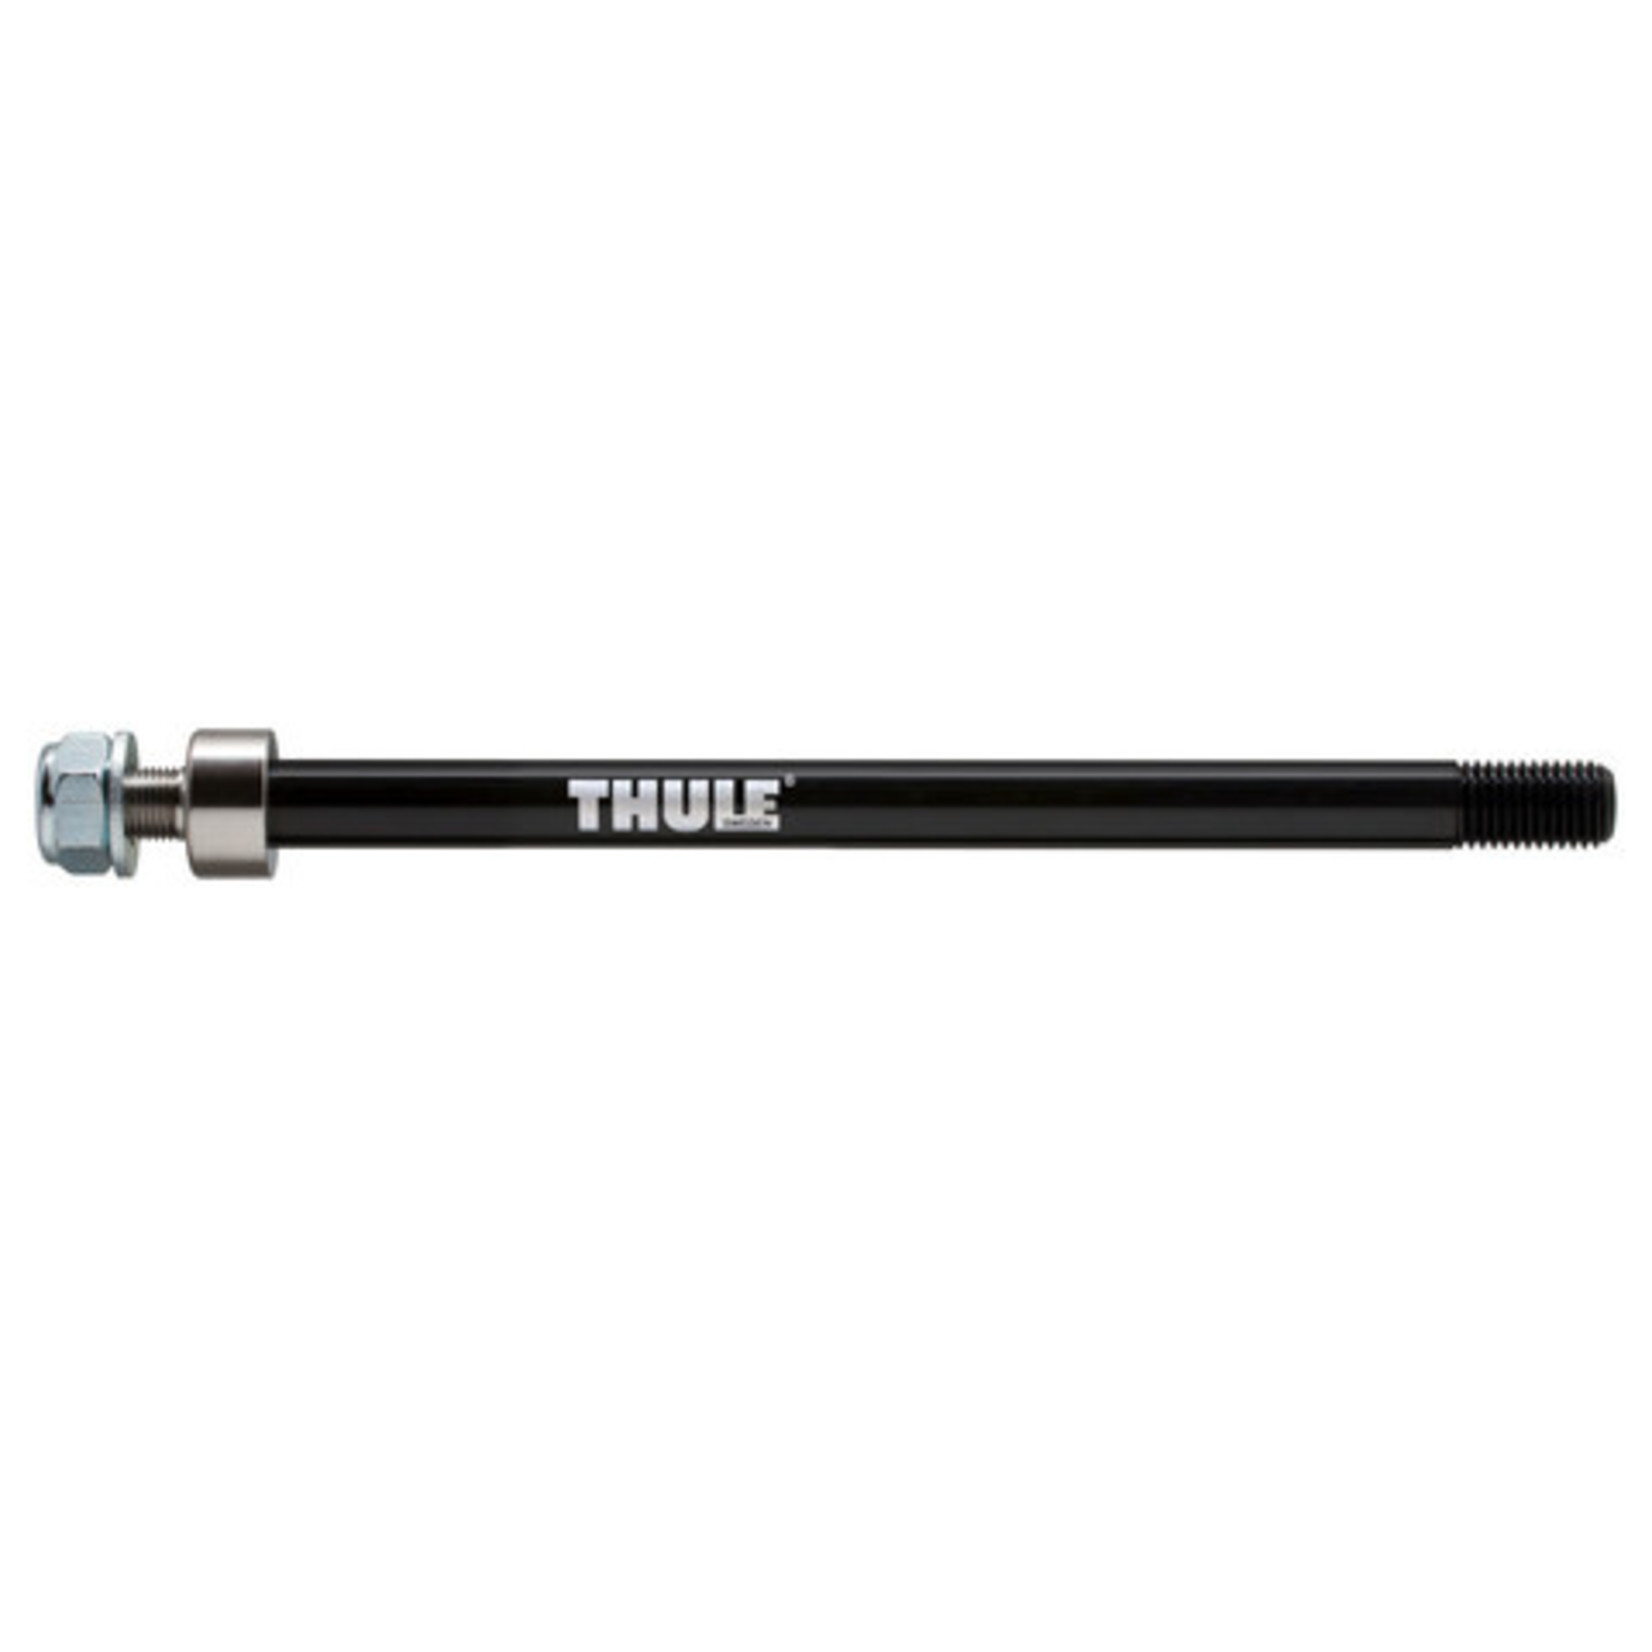 Thule Thule Thru Axle Shimano (M12 x 1.5) Adapter 229mm  20110738- Black